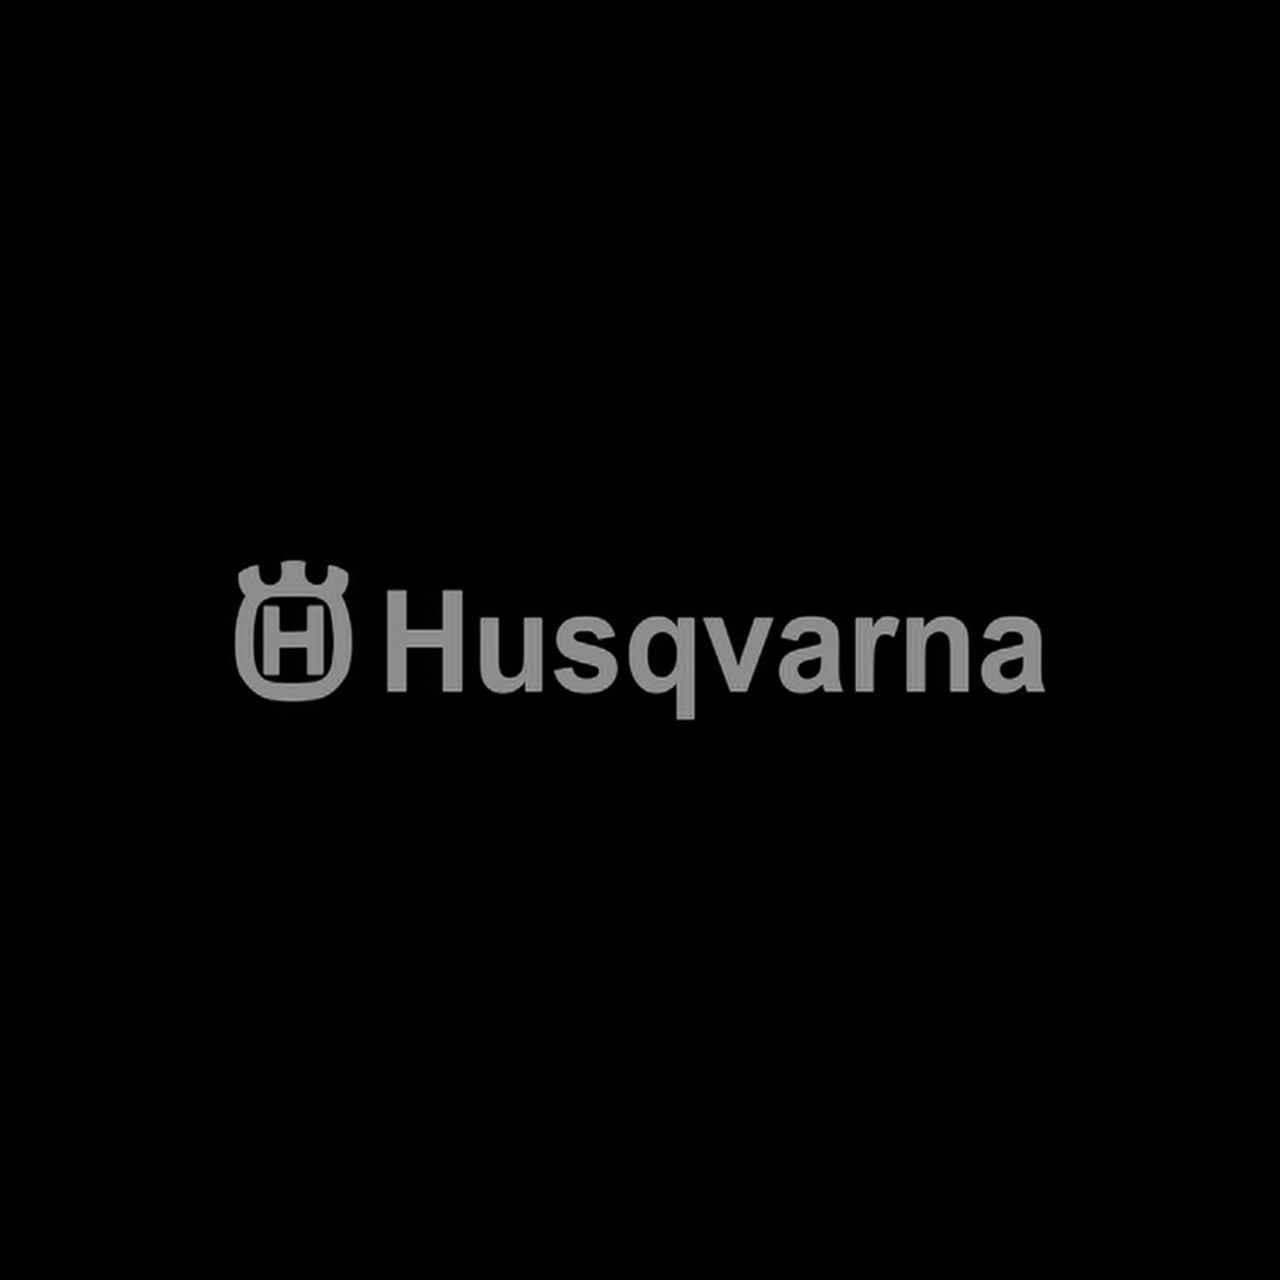 2x HUSQVARNA Sticker Decal Vinyl Motorcycle Chainsaw Logo Trimmer Blue Racing GP